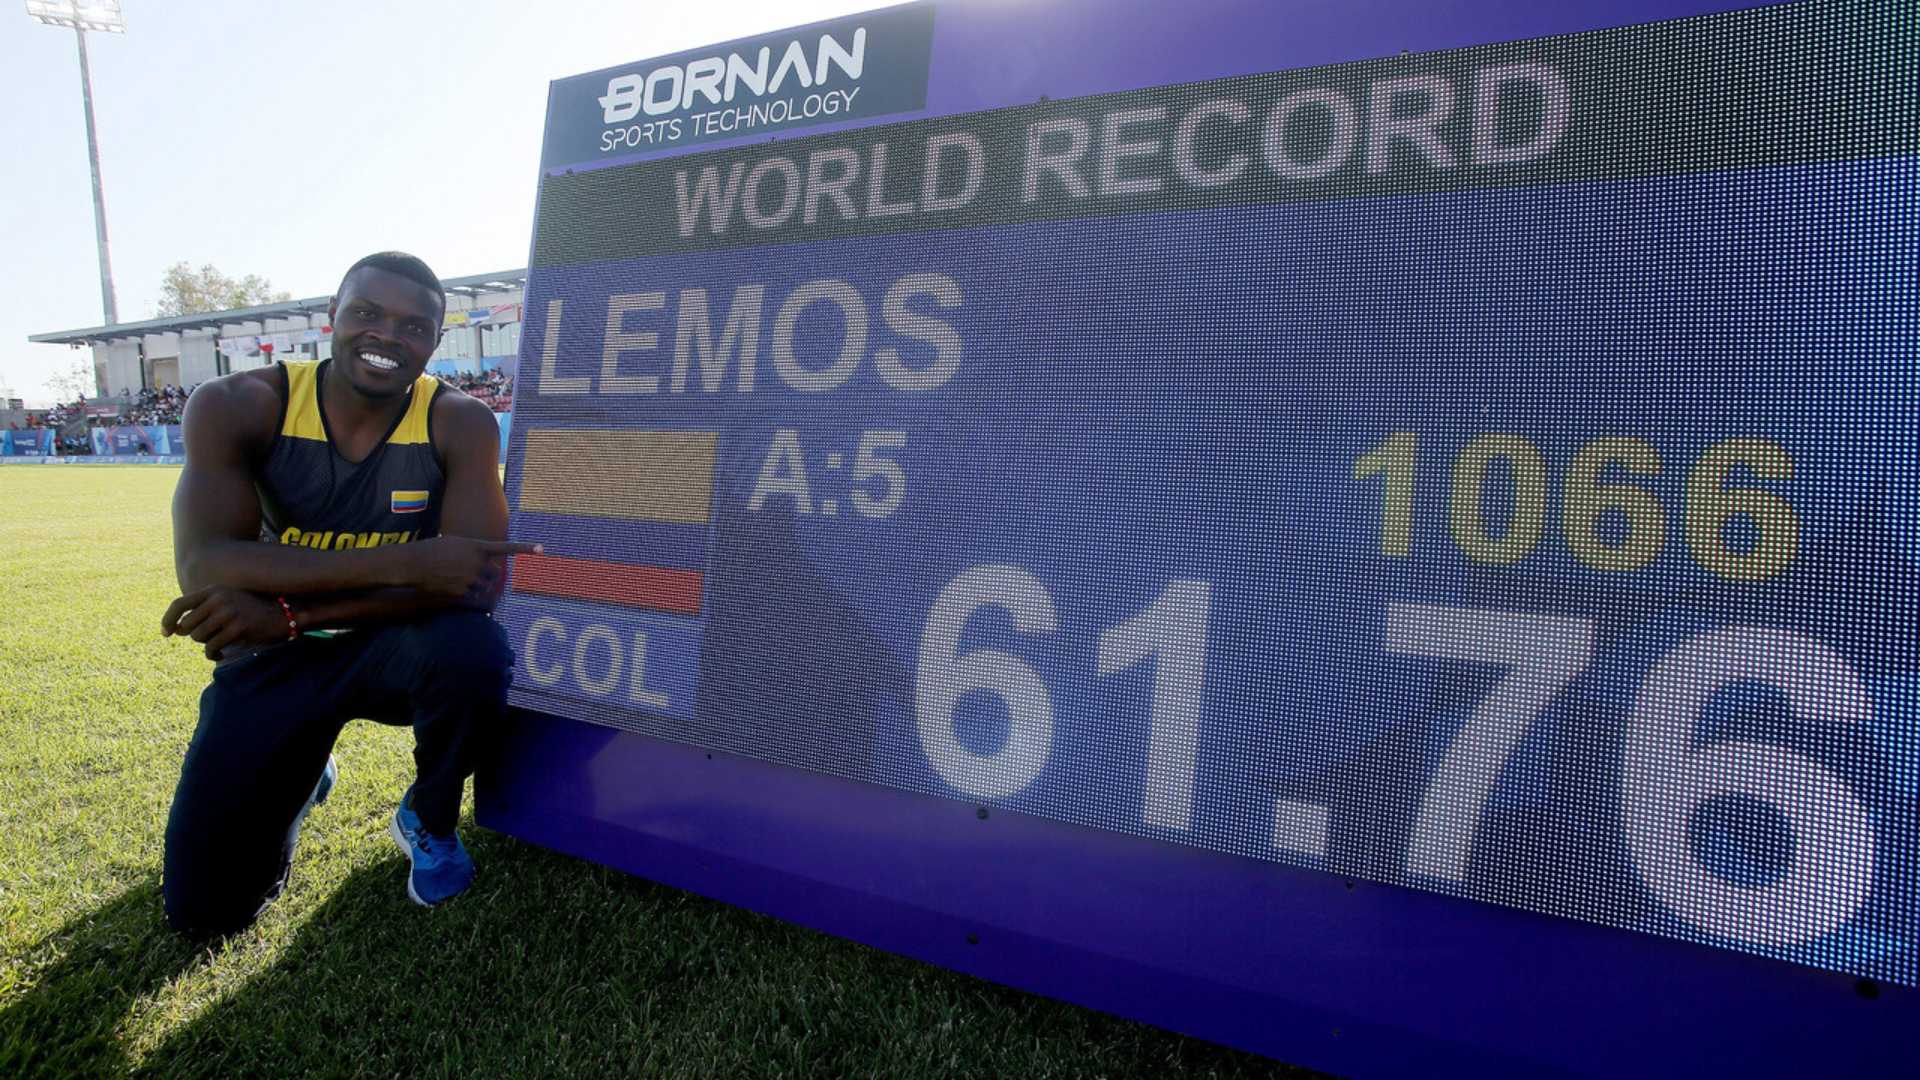 Colombian Lemos Surpasses Himself, Sets New World Record